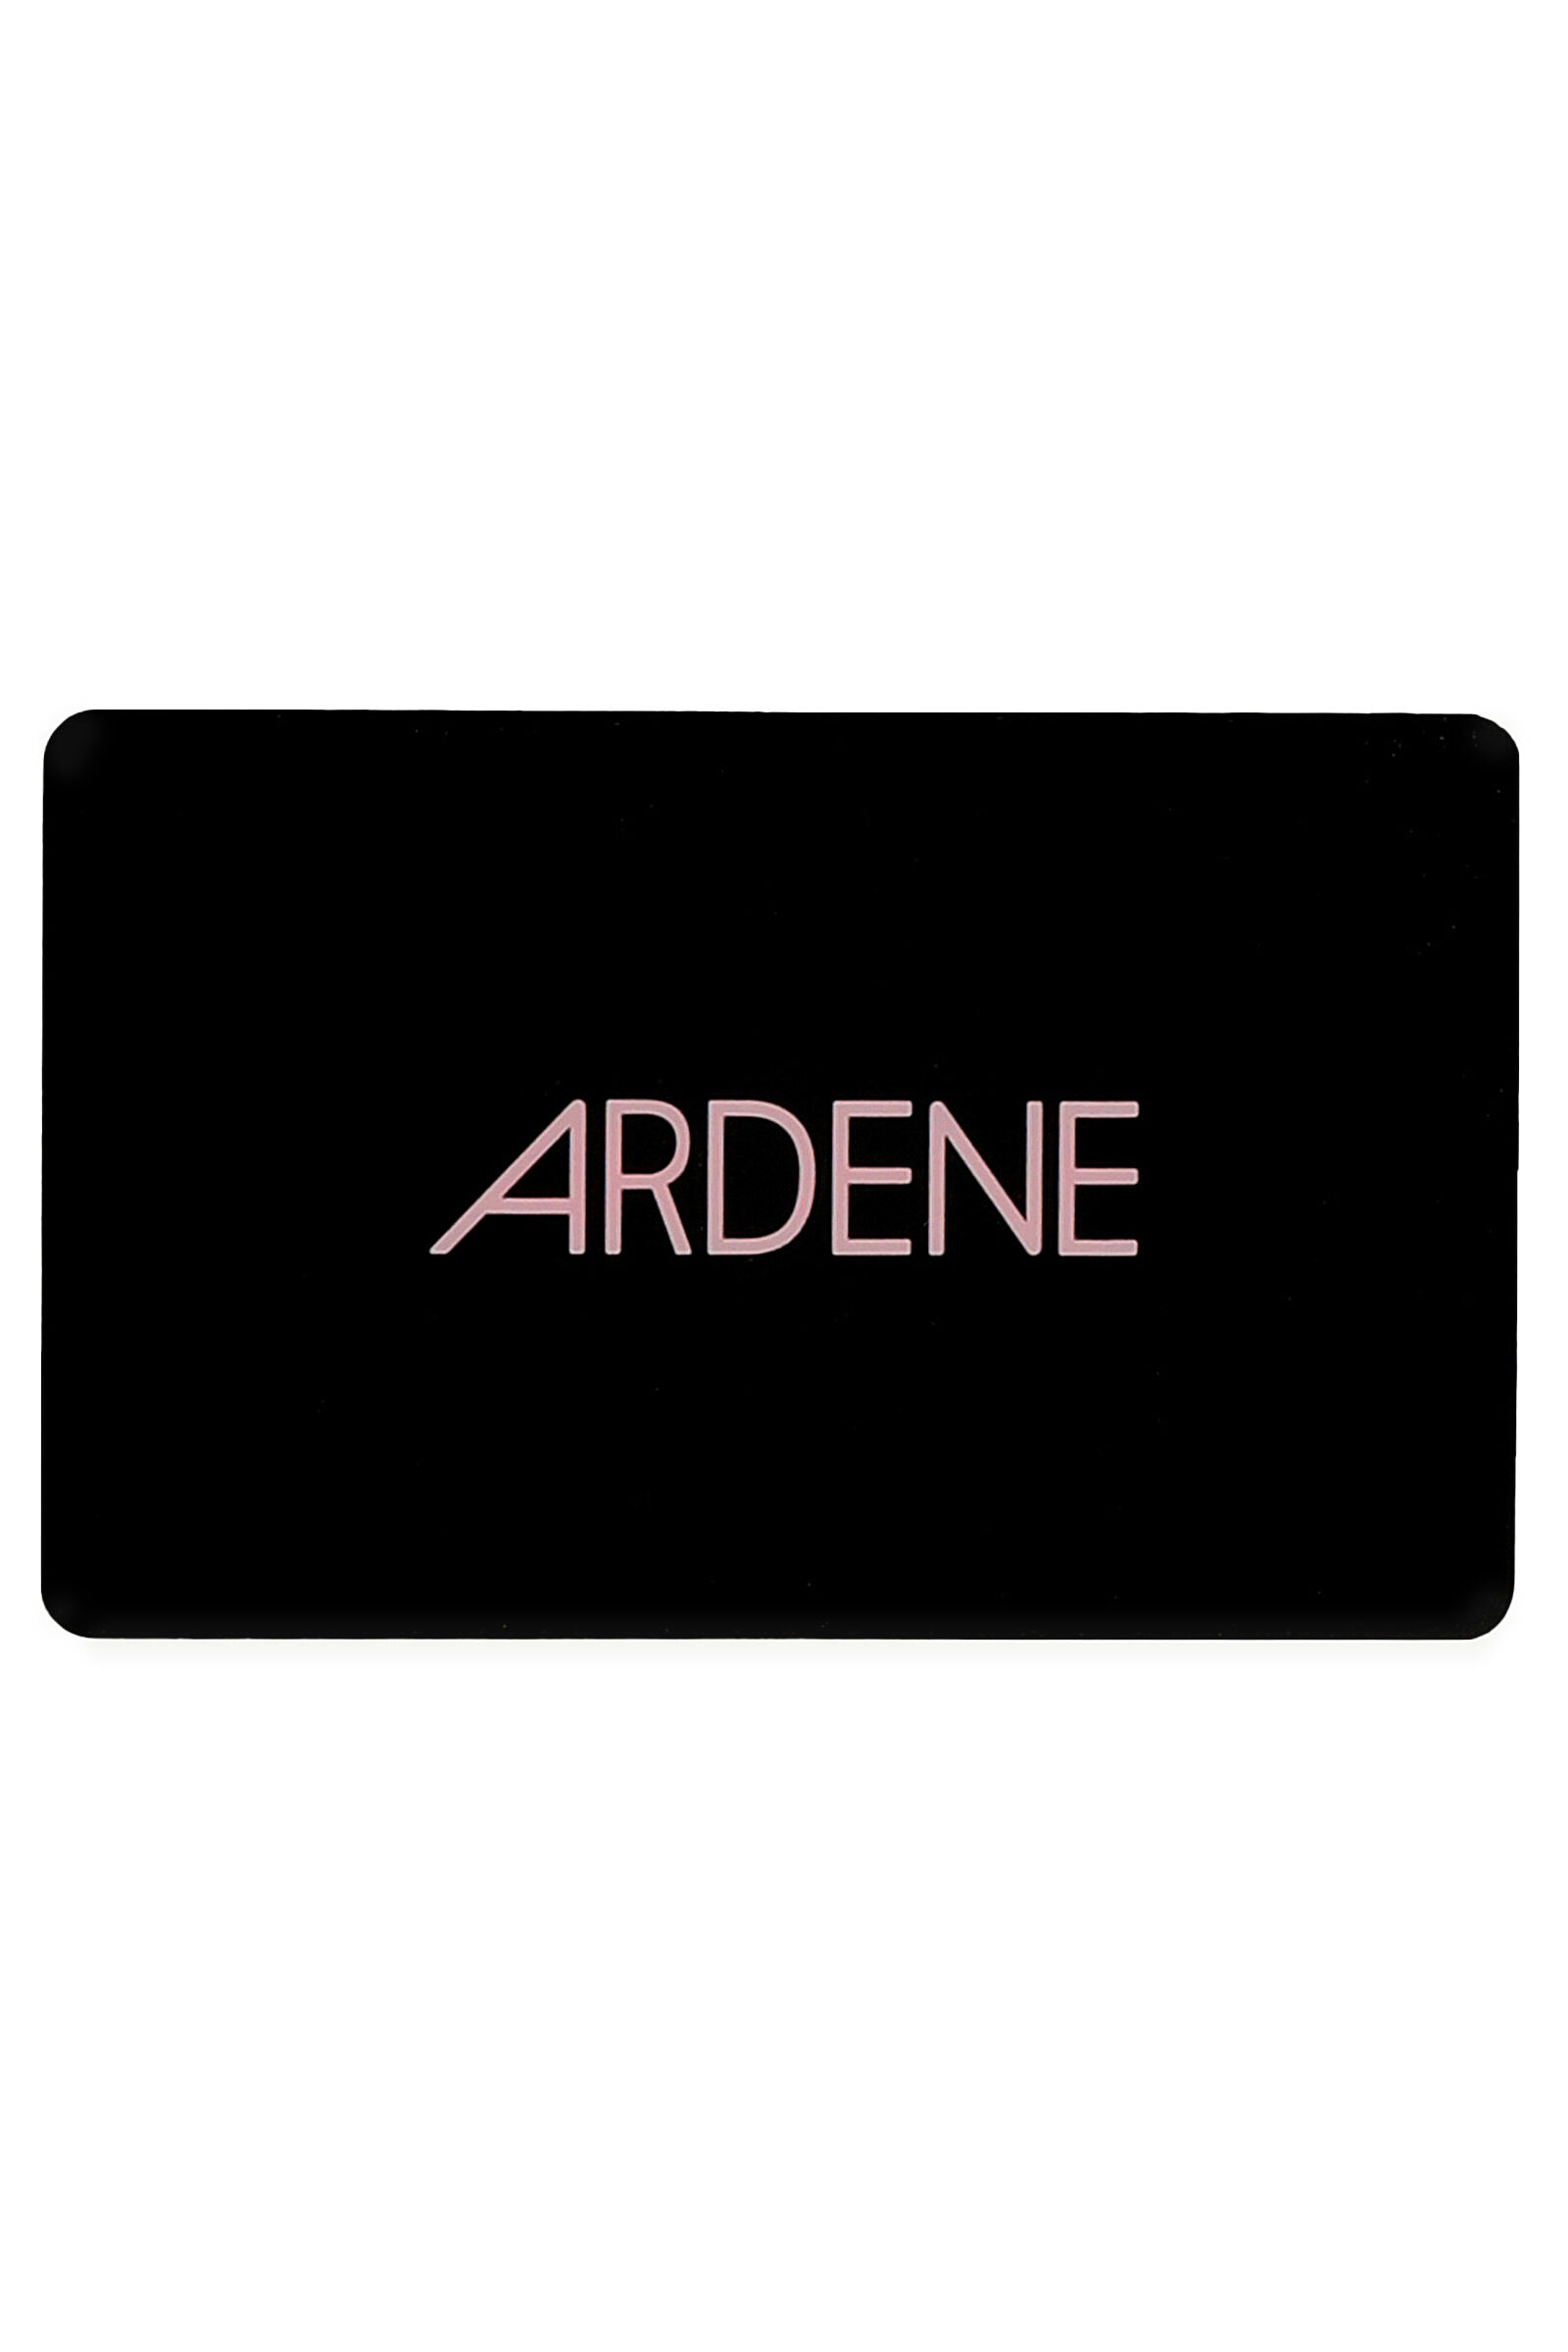 ARDENE $0 Girl Holding a Dream Catcher 2014 Gift Card Canada 